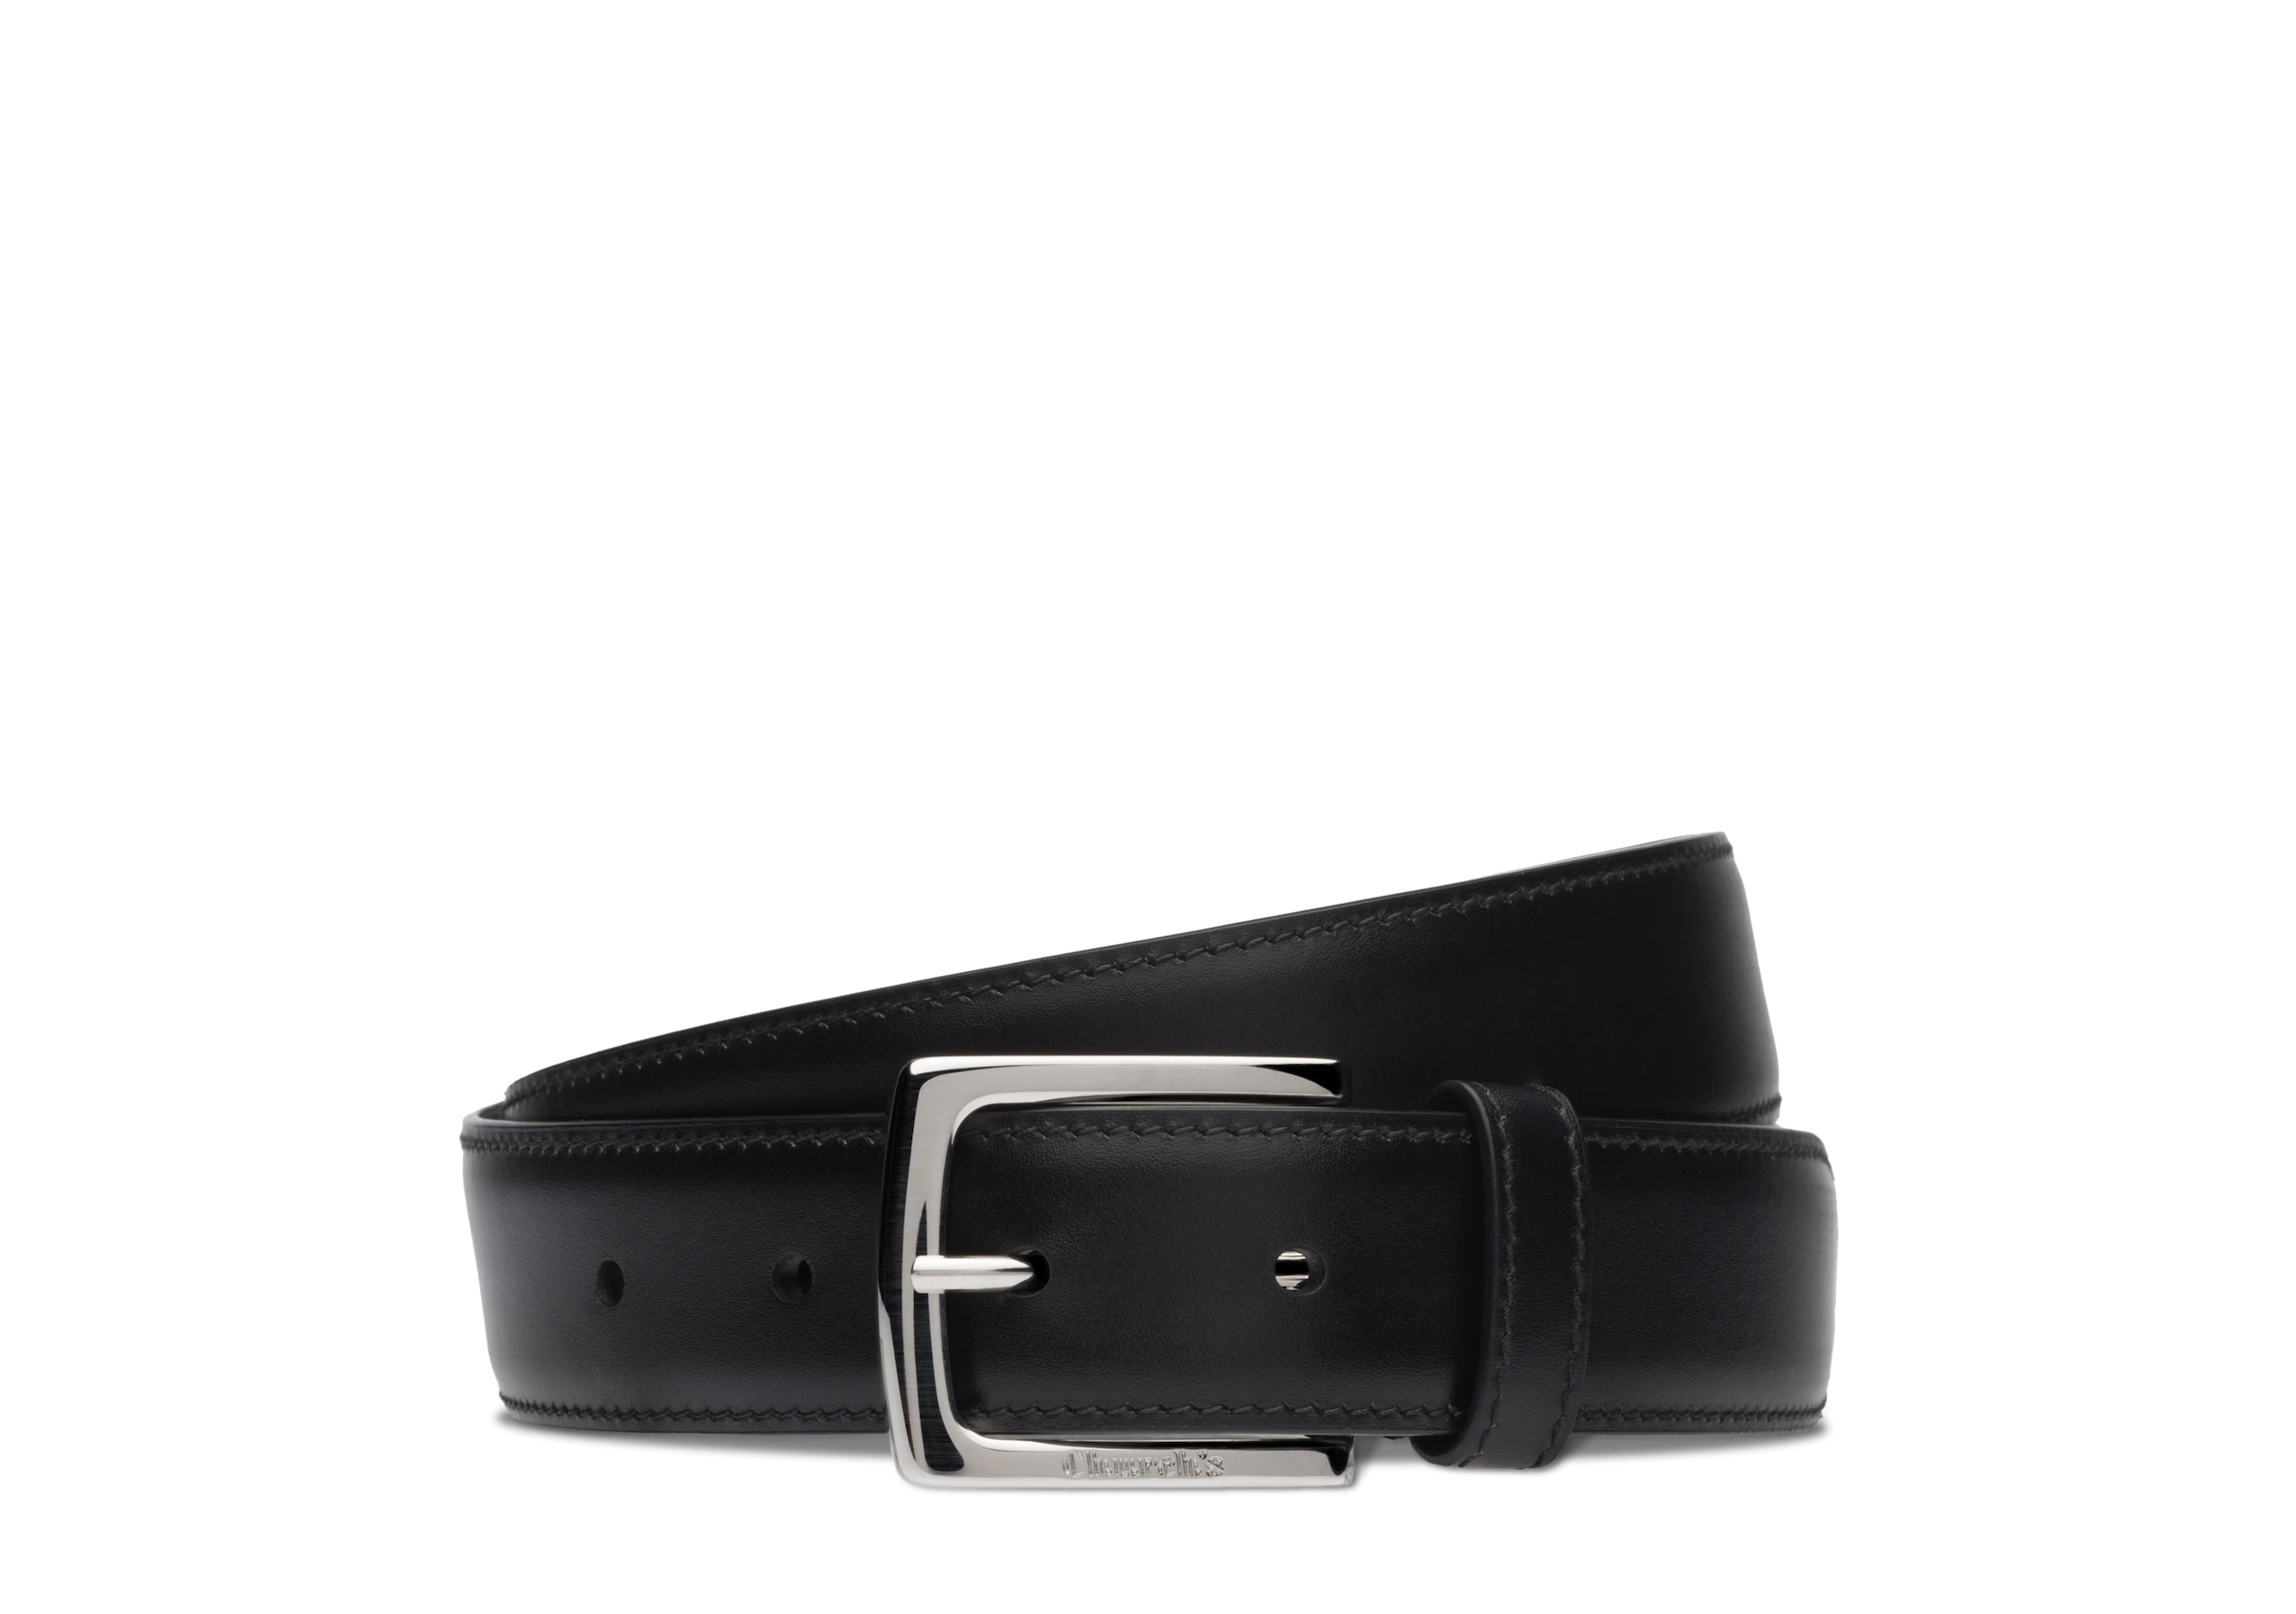 Square buckle belt
Calf Leather Black - 1